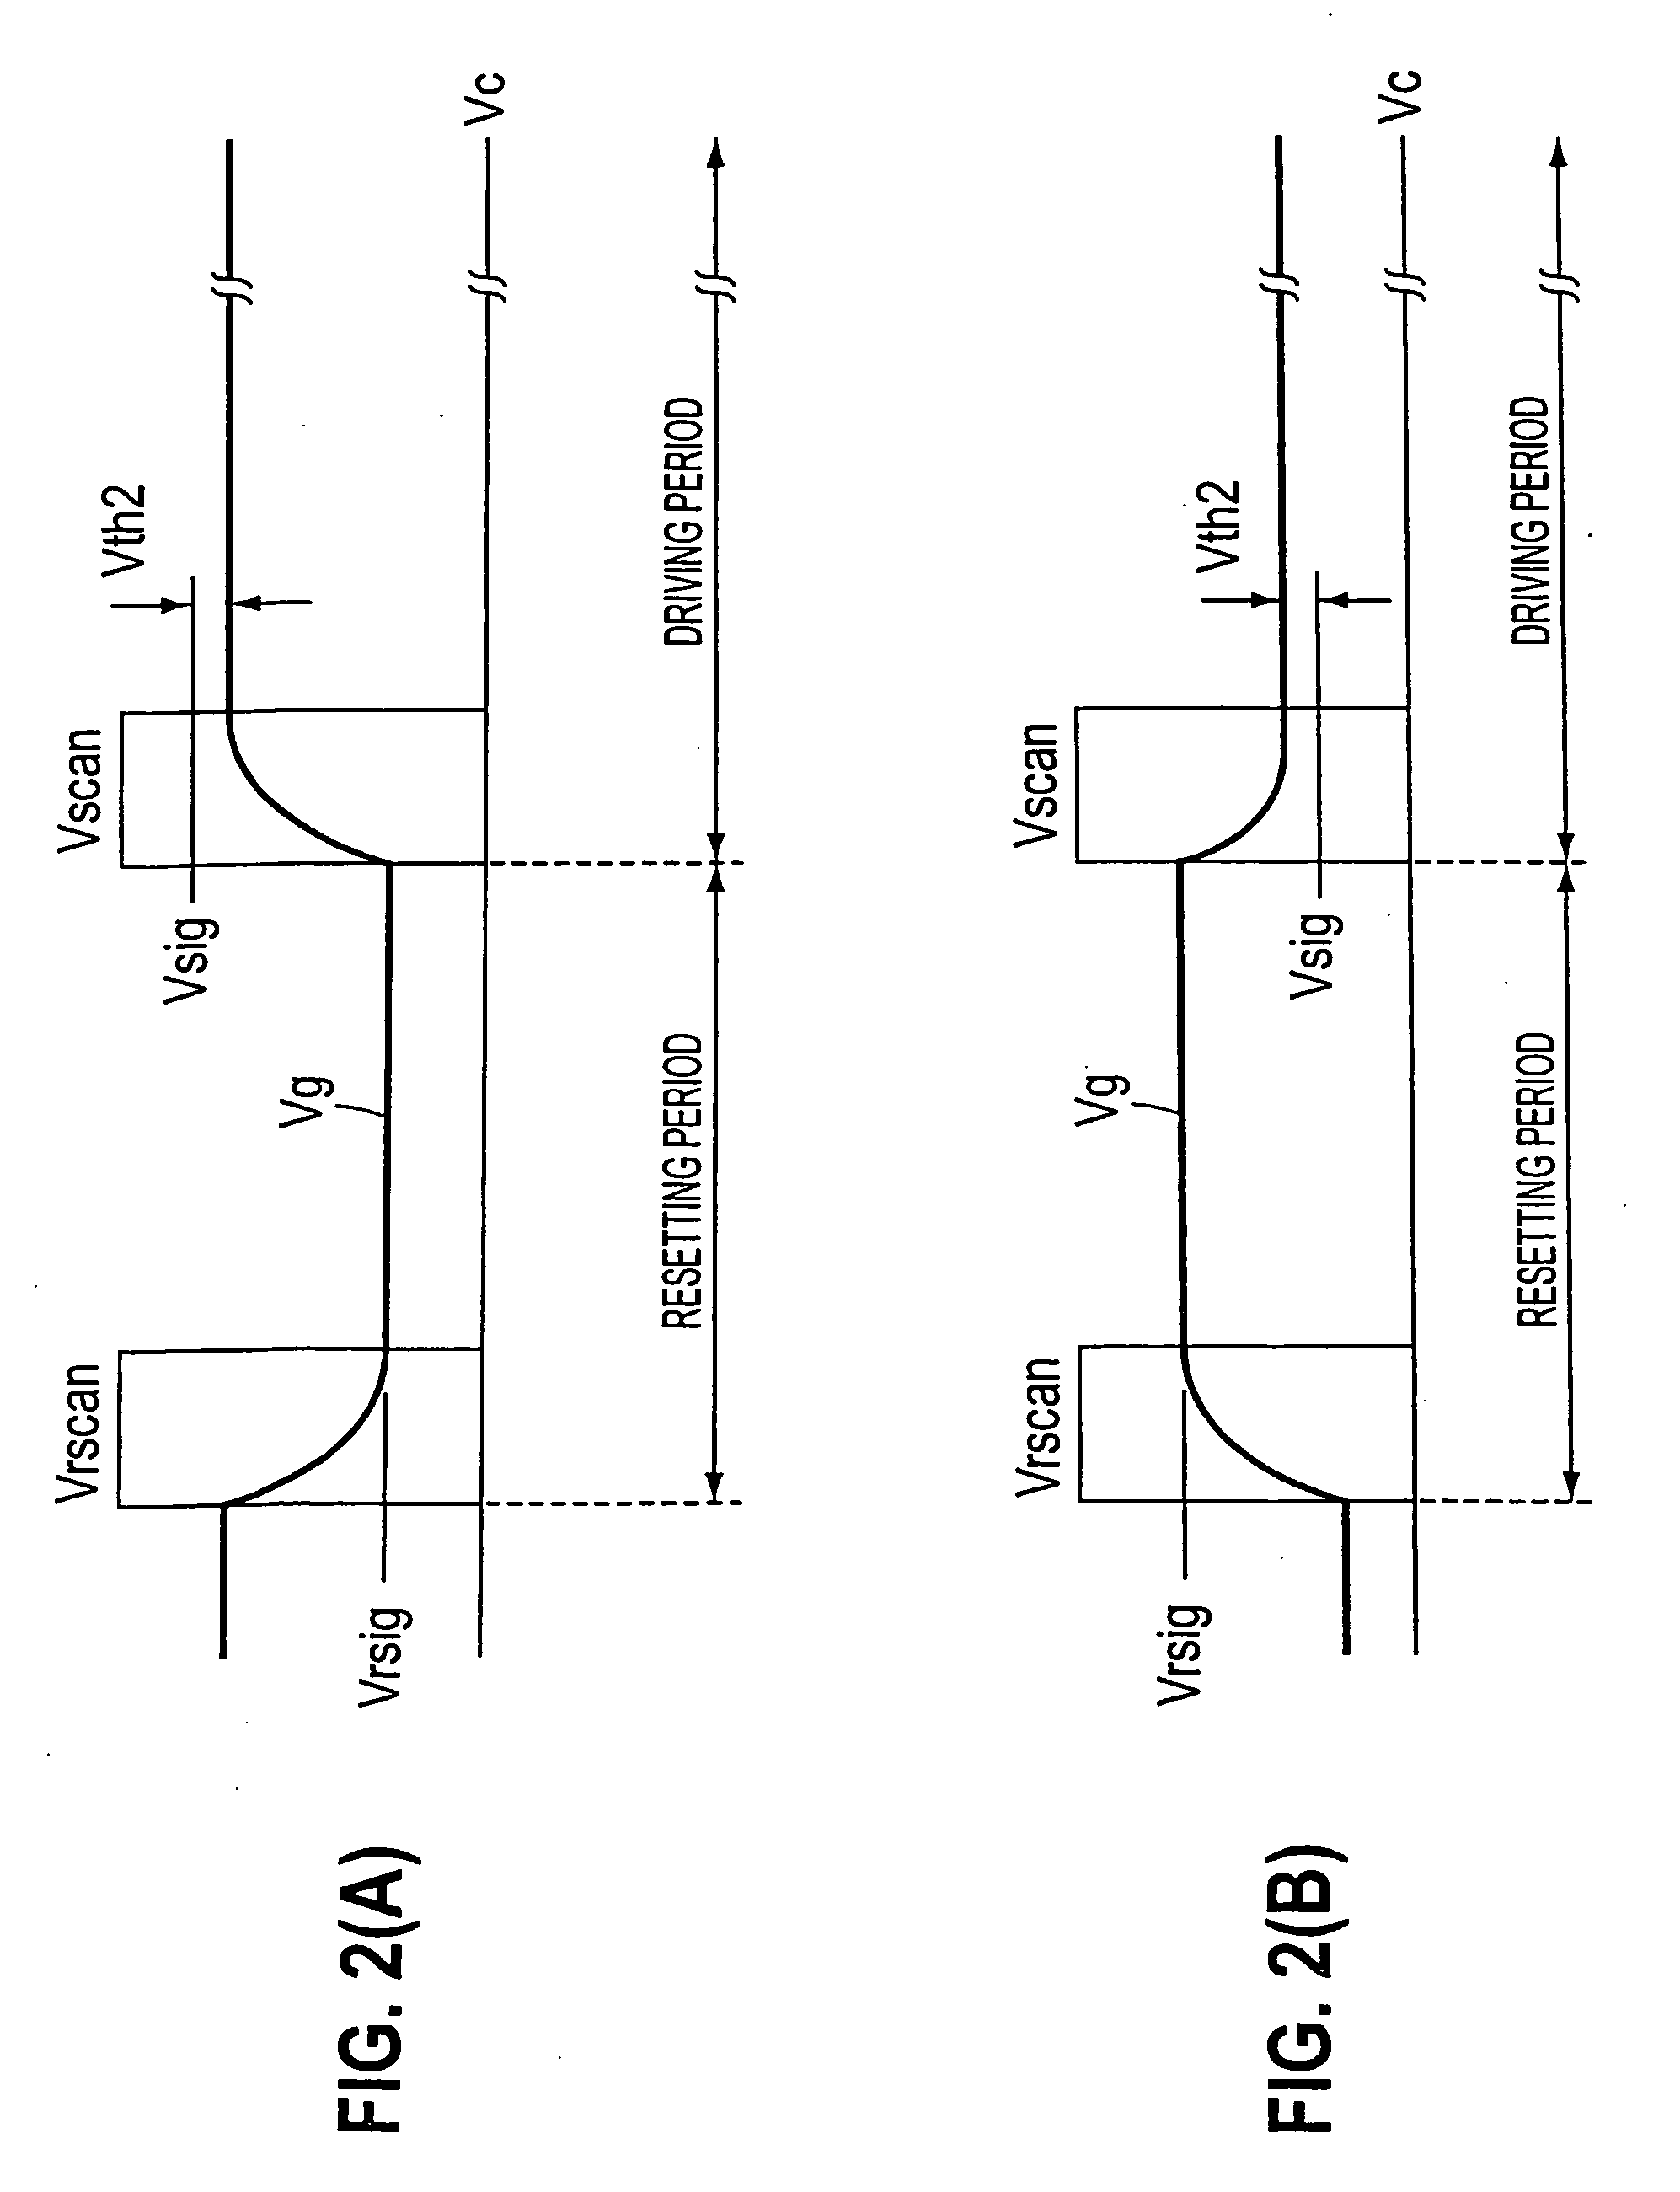 Transistor circuit, display panel and electronic apparatus